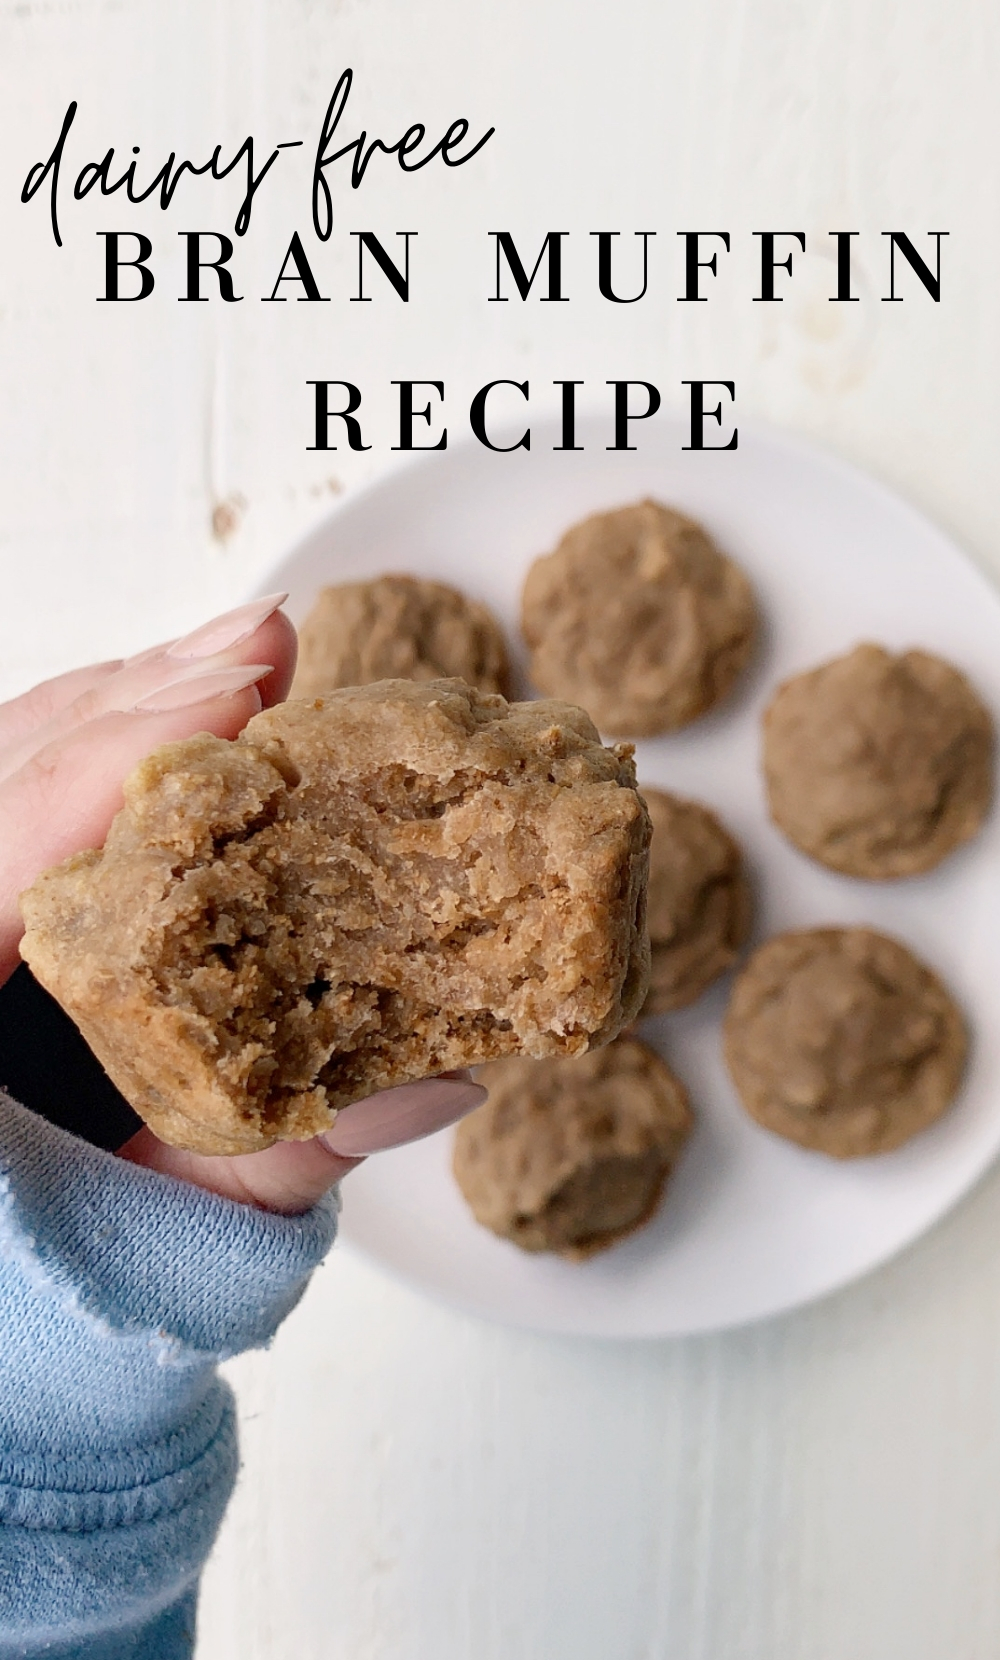 dairy-free bran muffin recipe